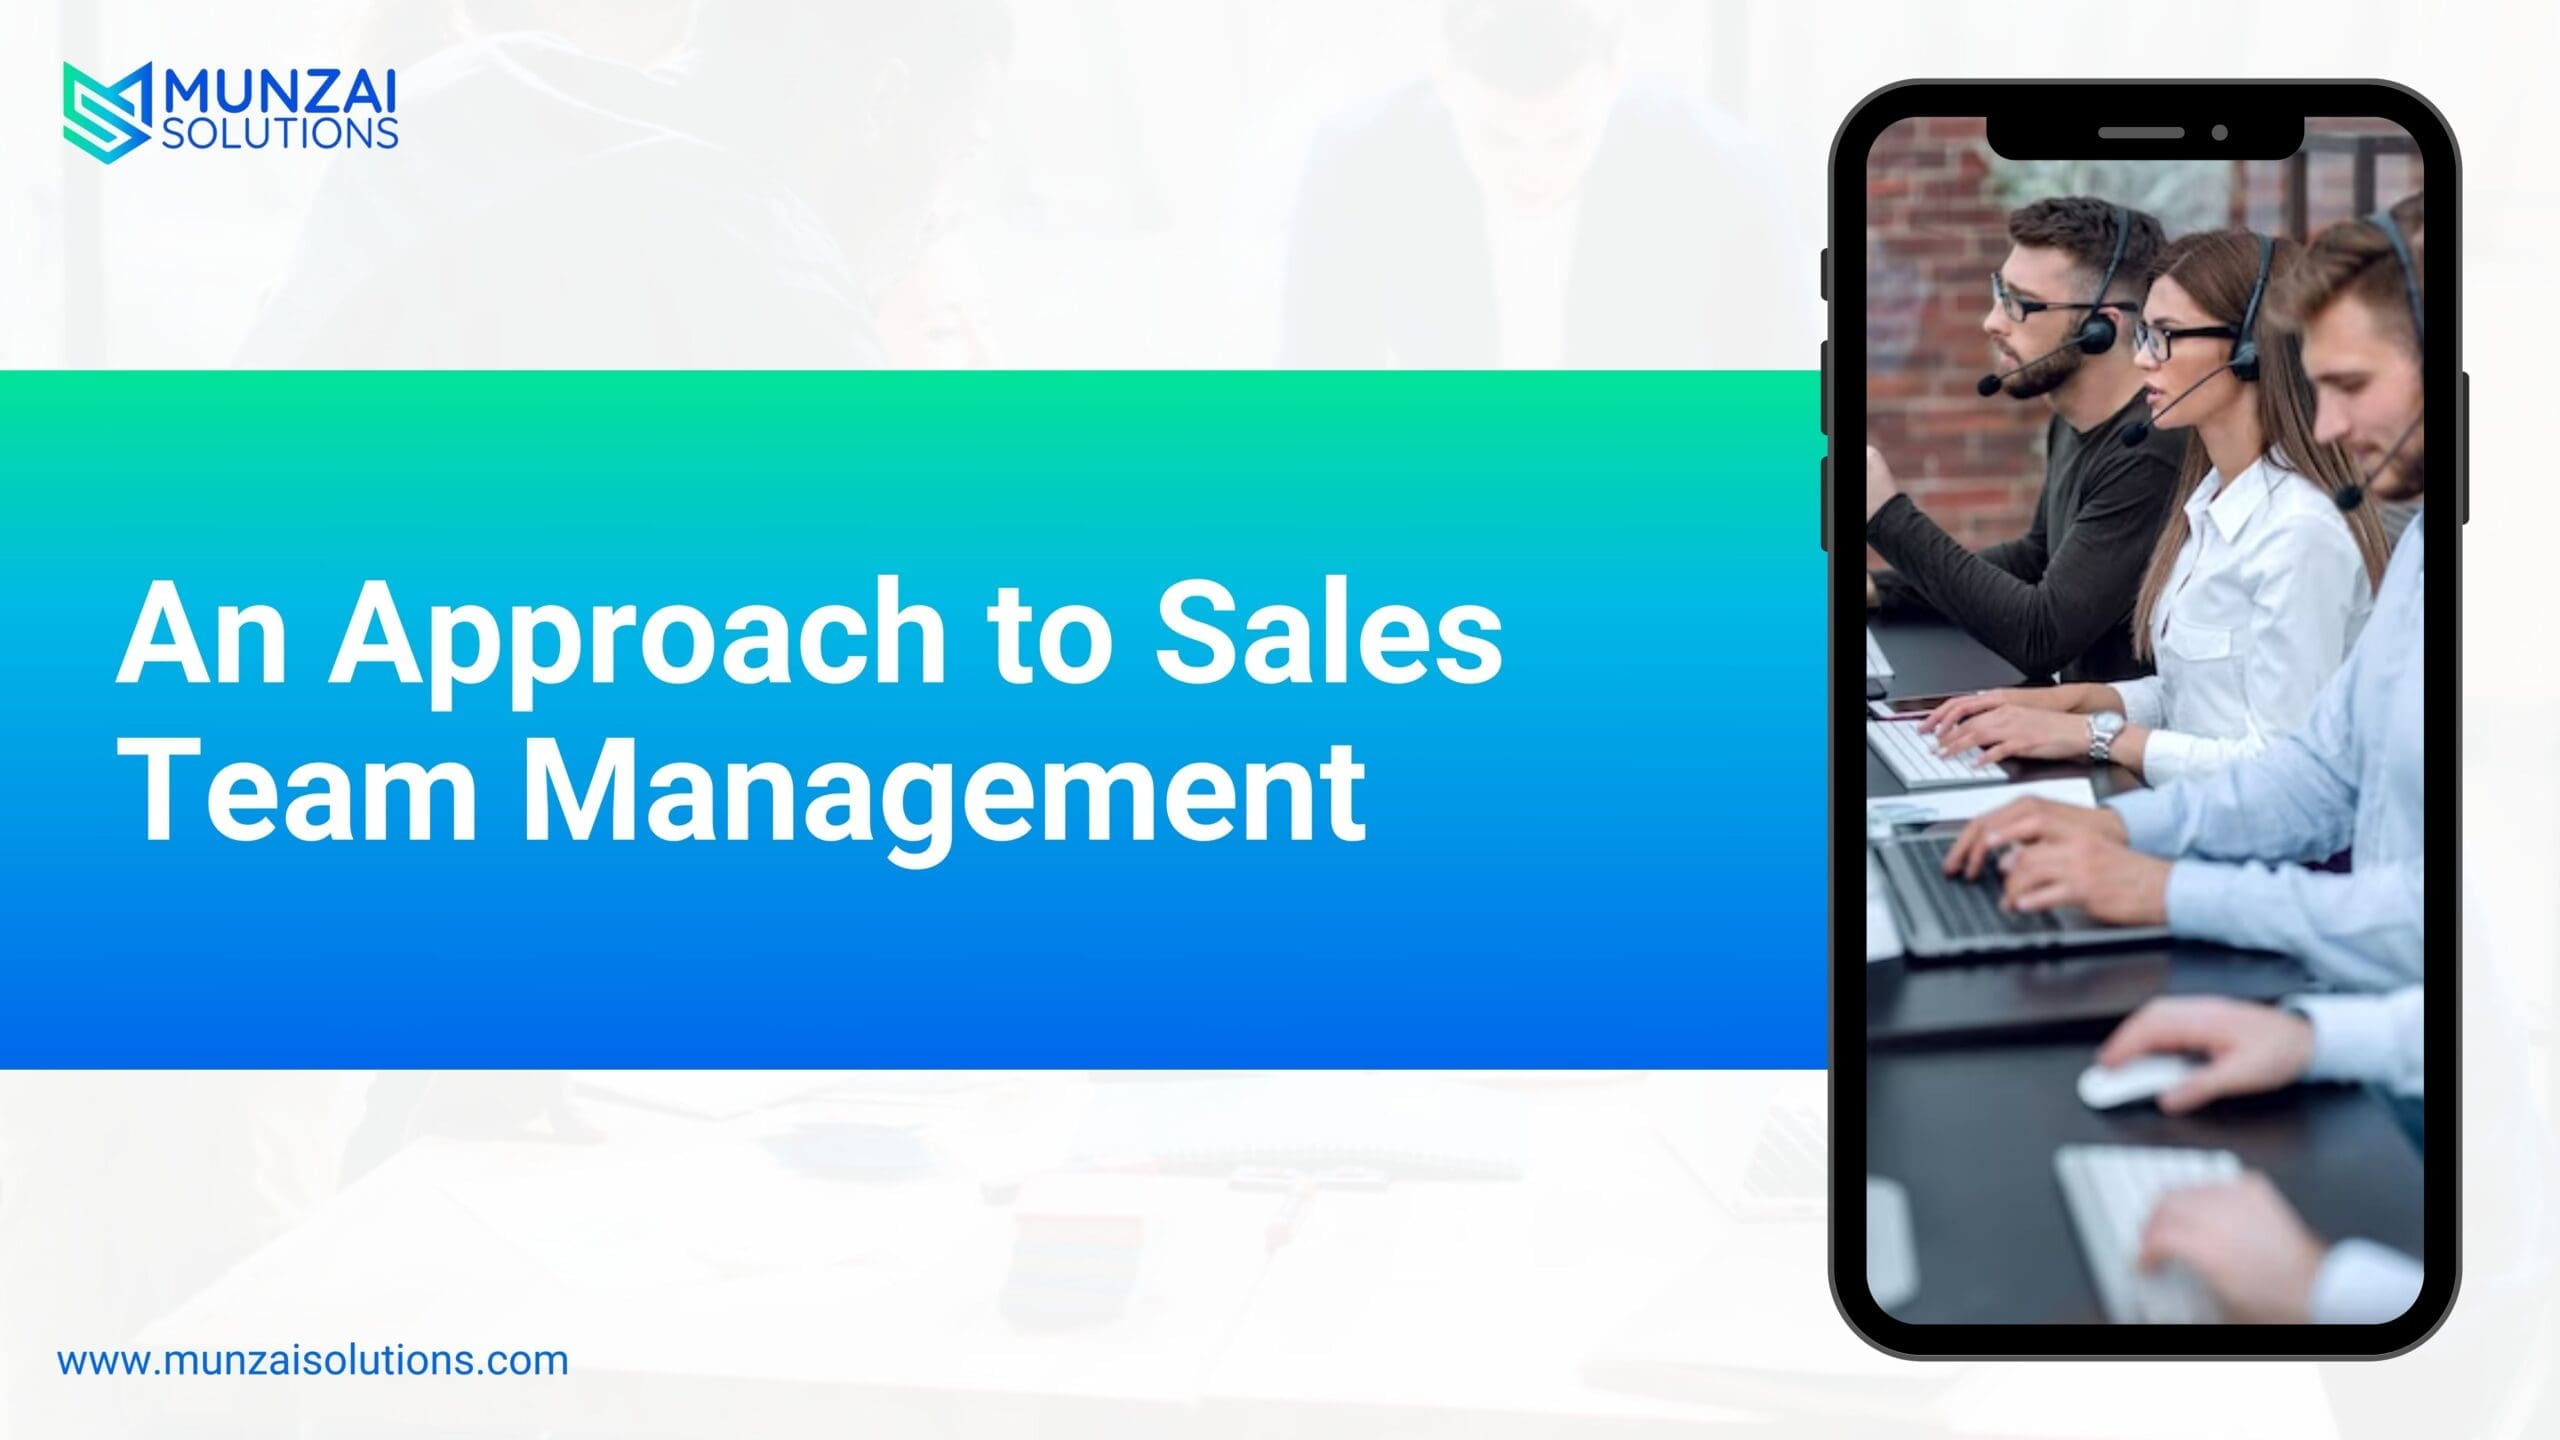 An Approach to Sales Team Management